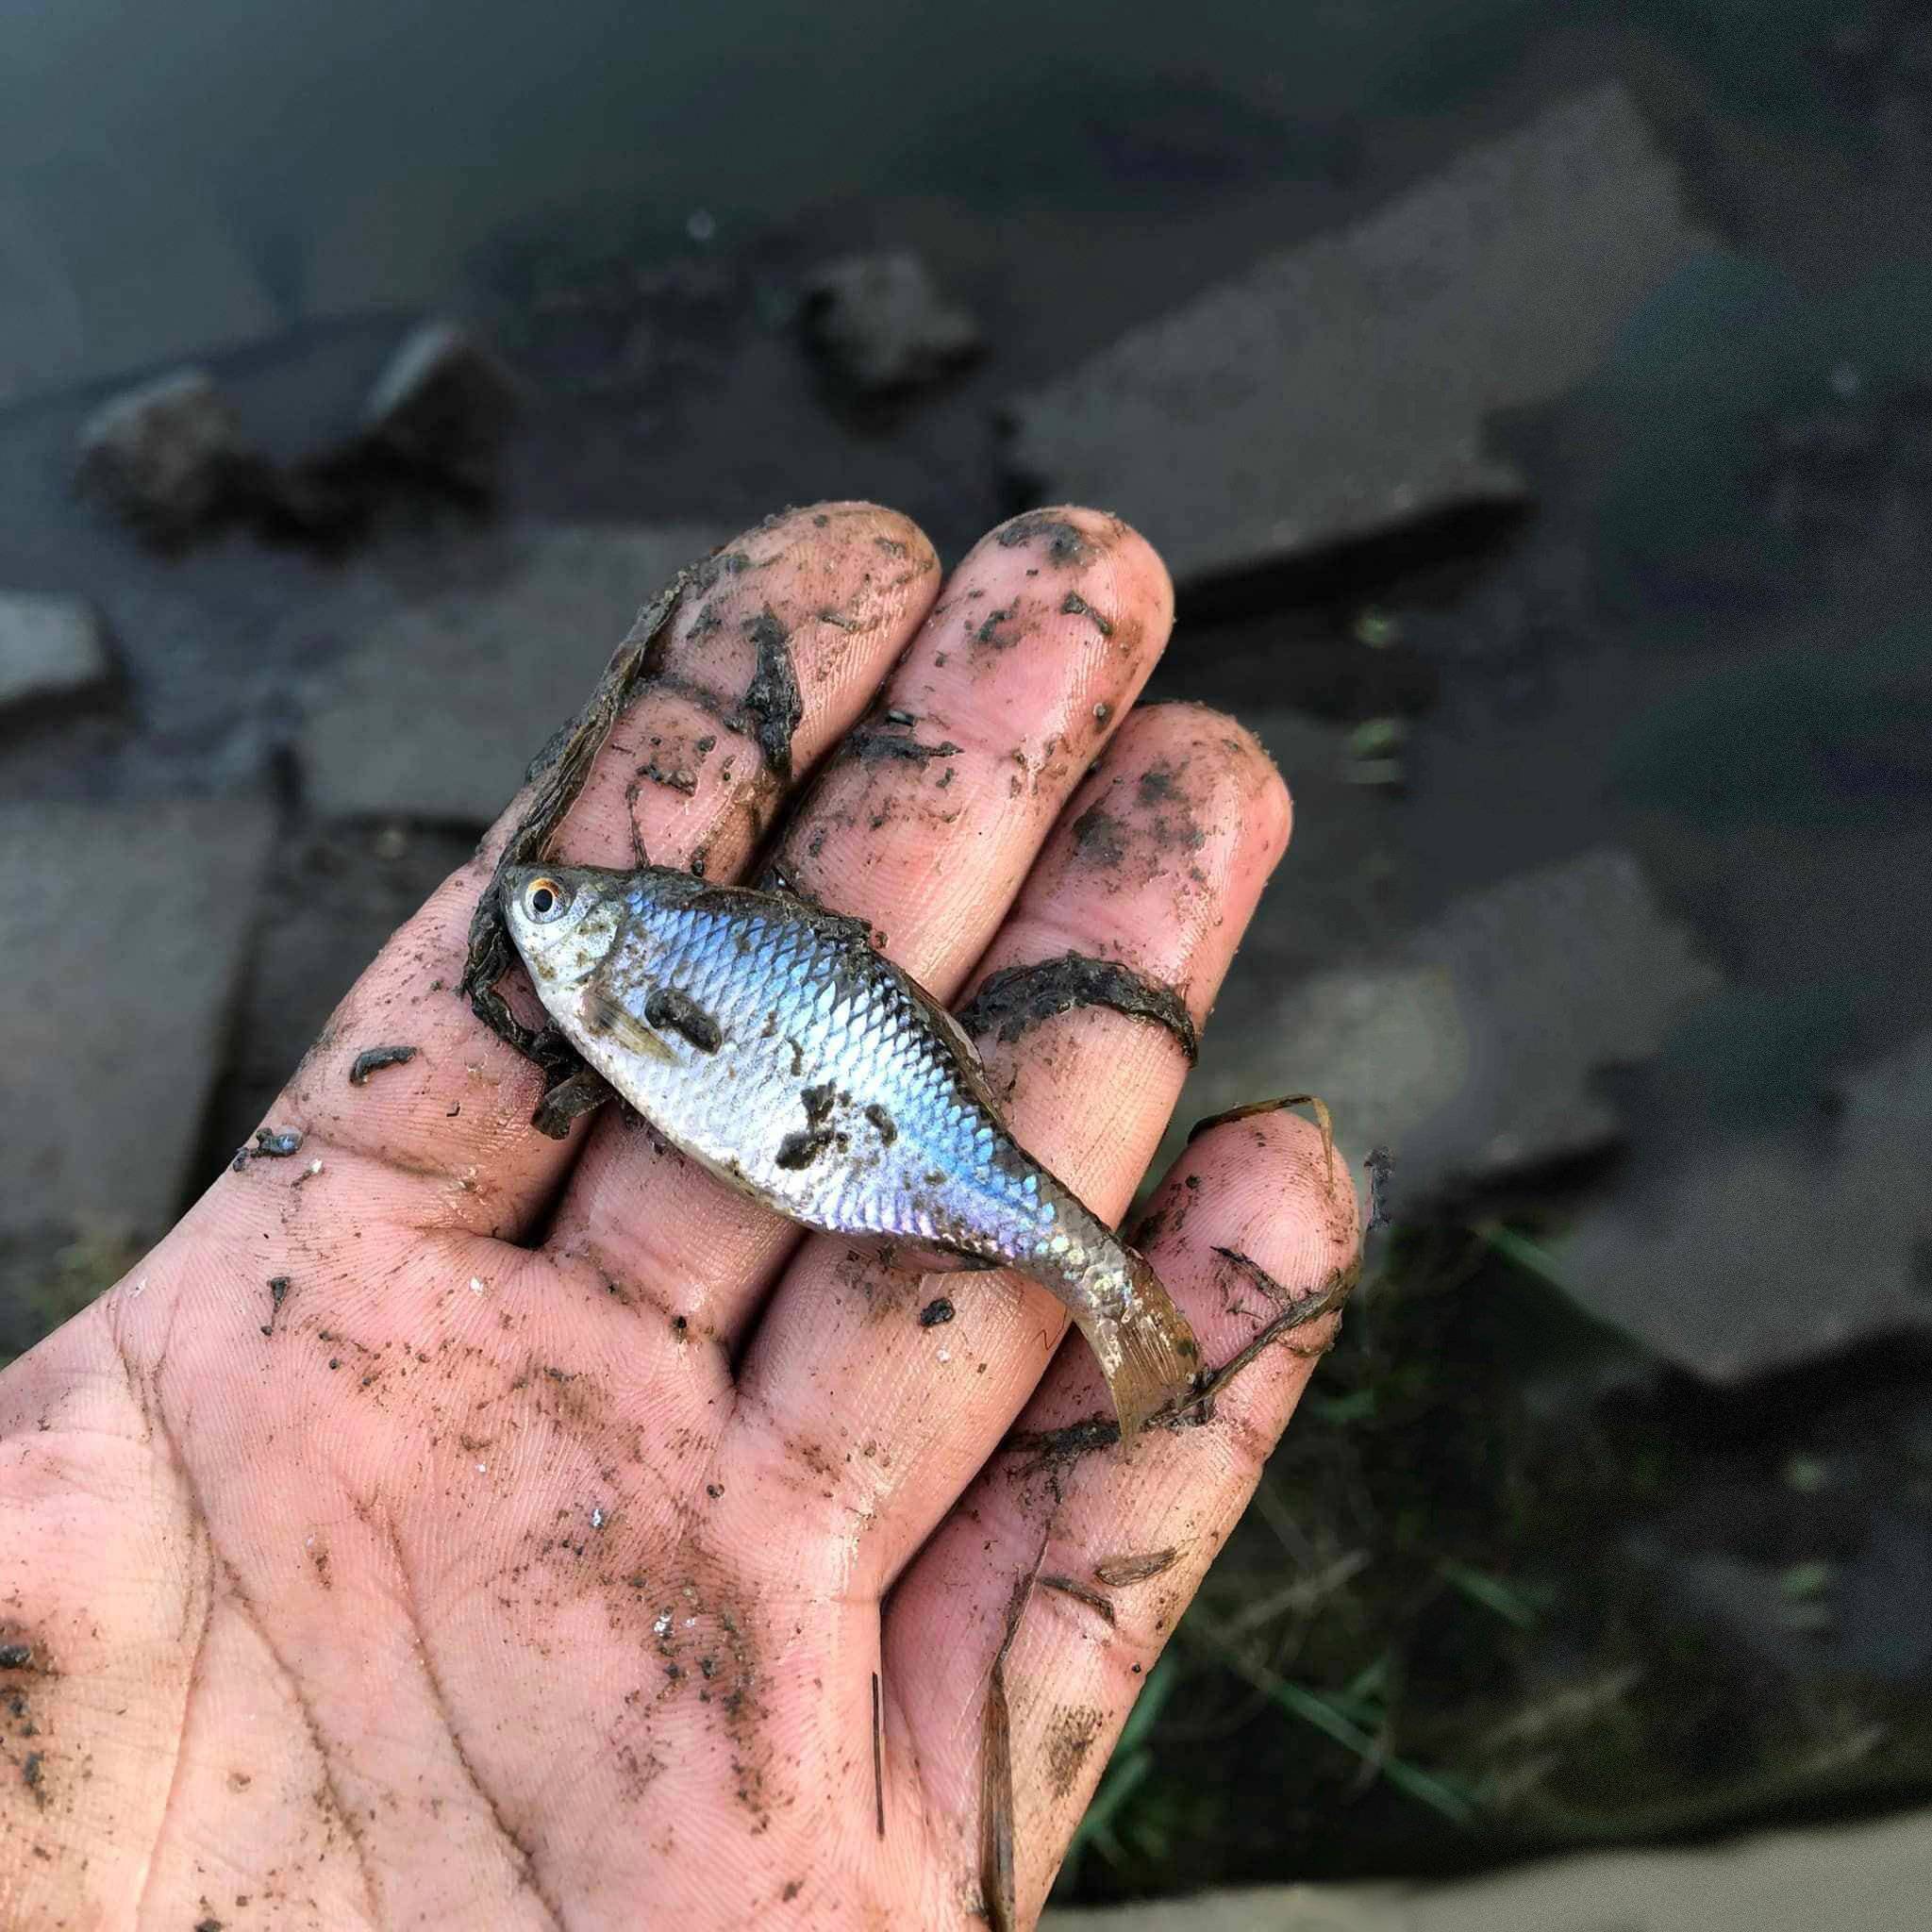 martwa ryba na dłoni wędkarza